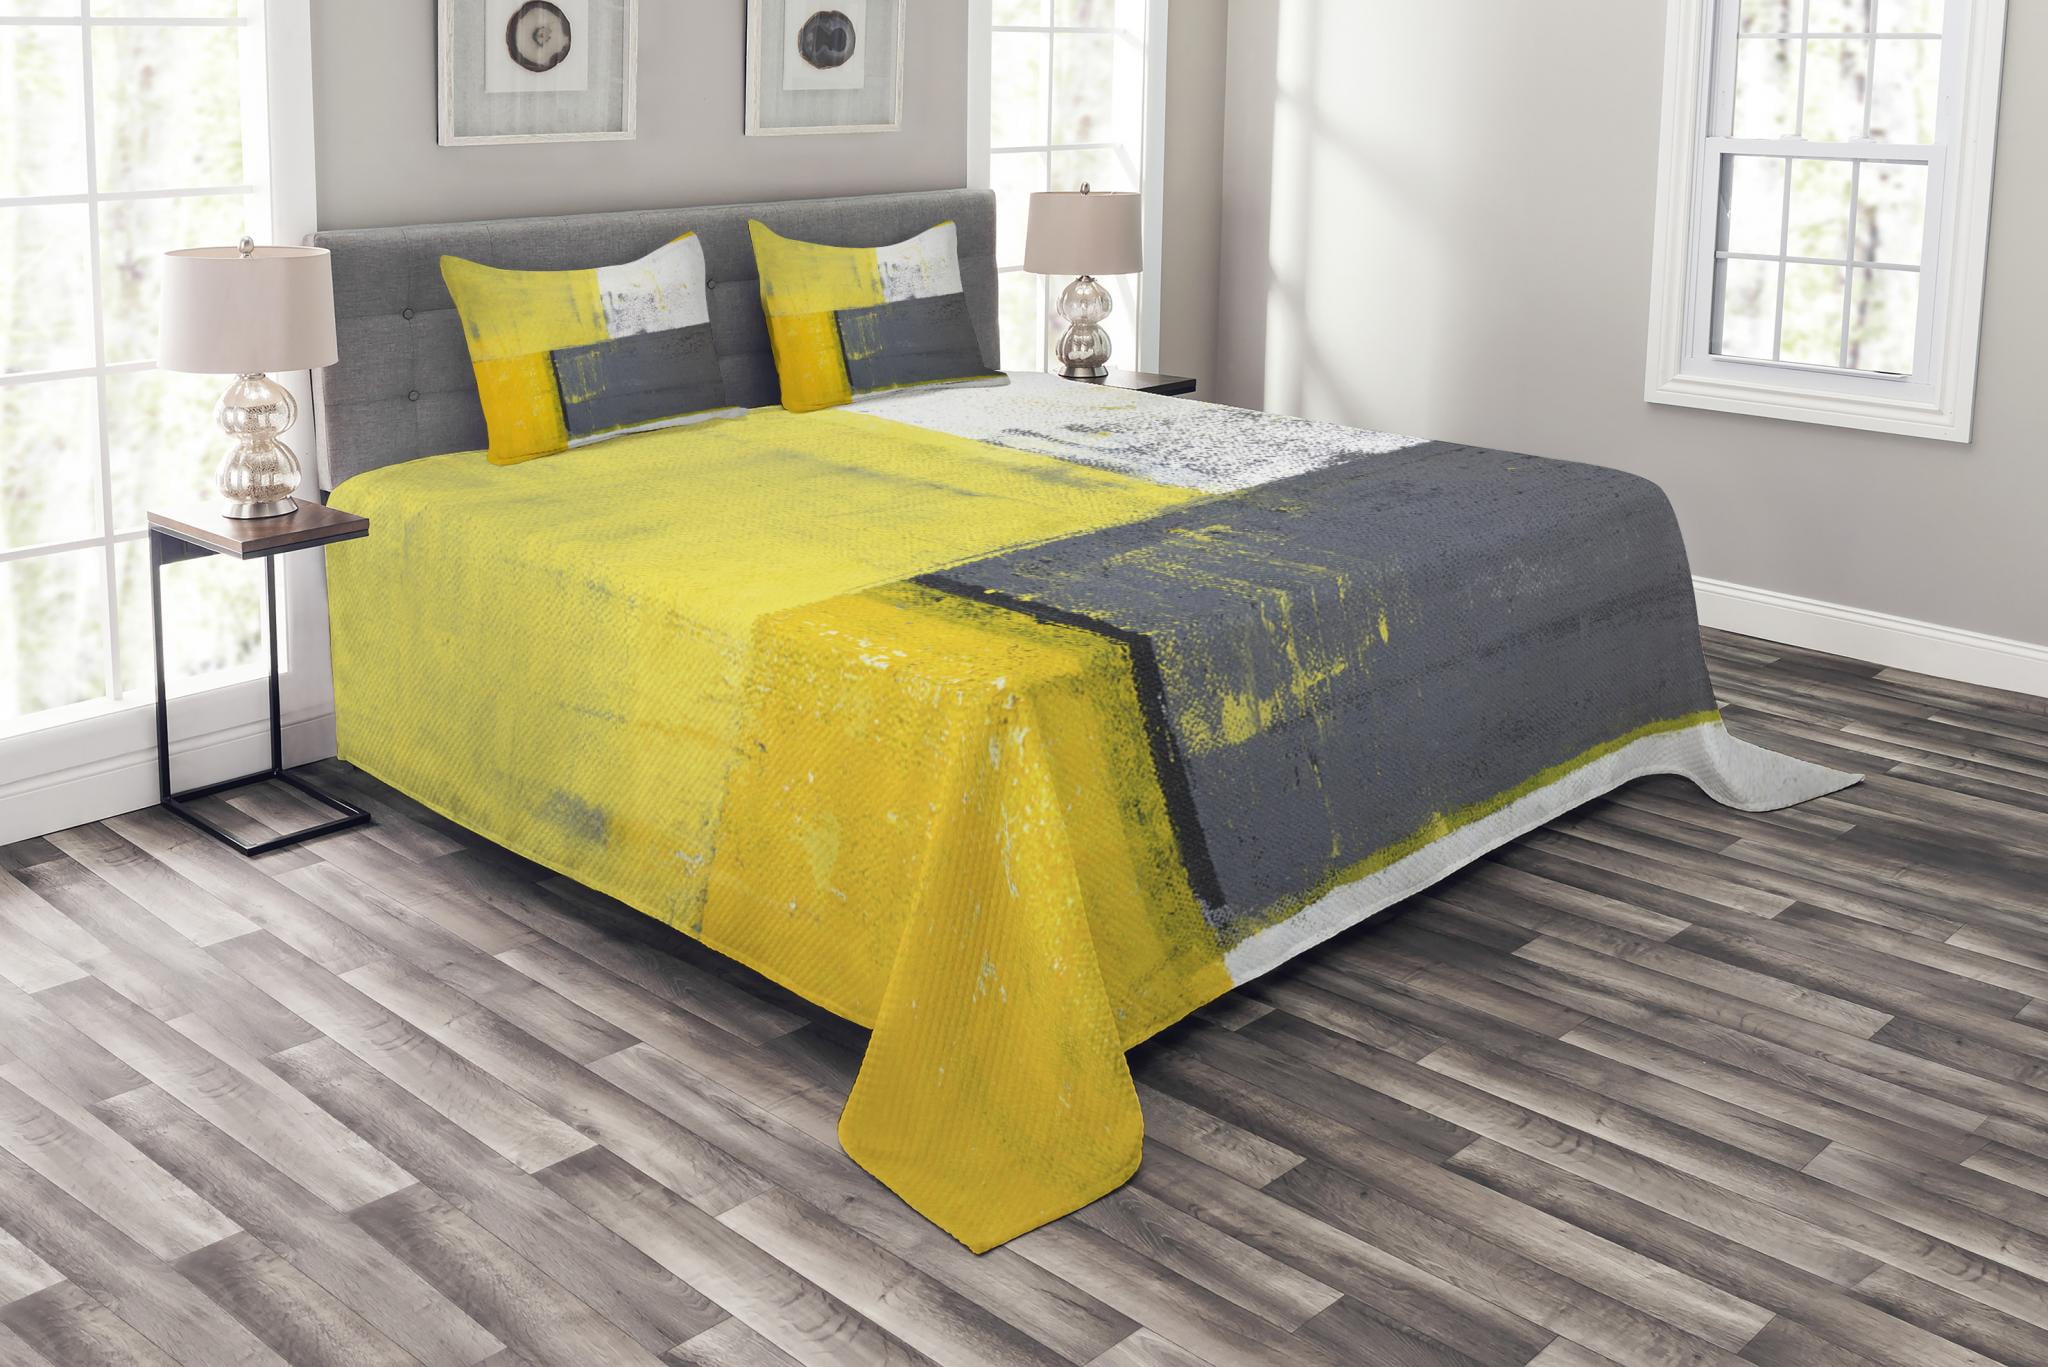 Grey and Yellow Bedspread Set Queen Size, Street Art Modern Grunge ...